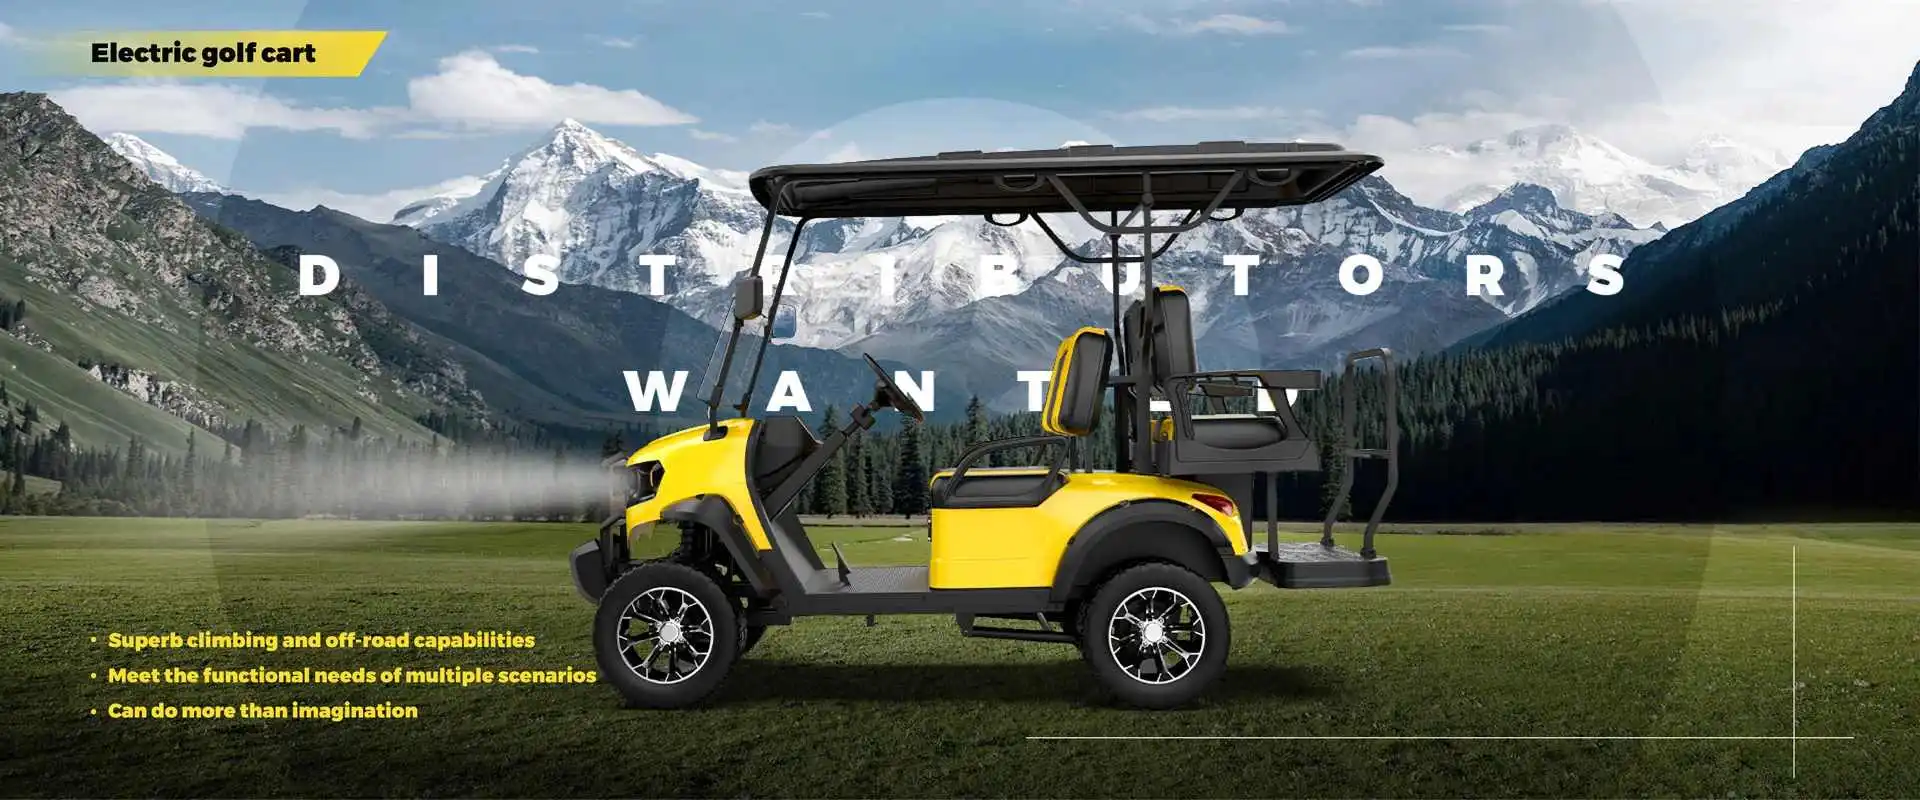 FL 2 2-Sitzer Elektro-Lifted Golf wagen